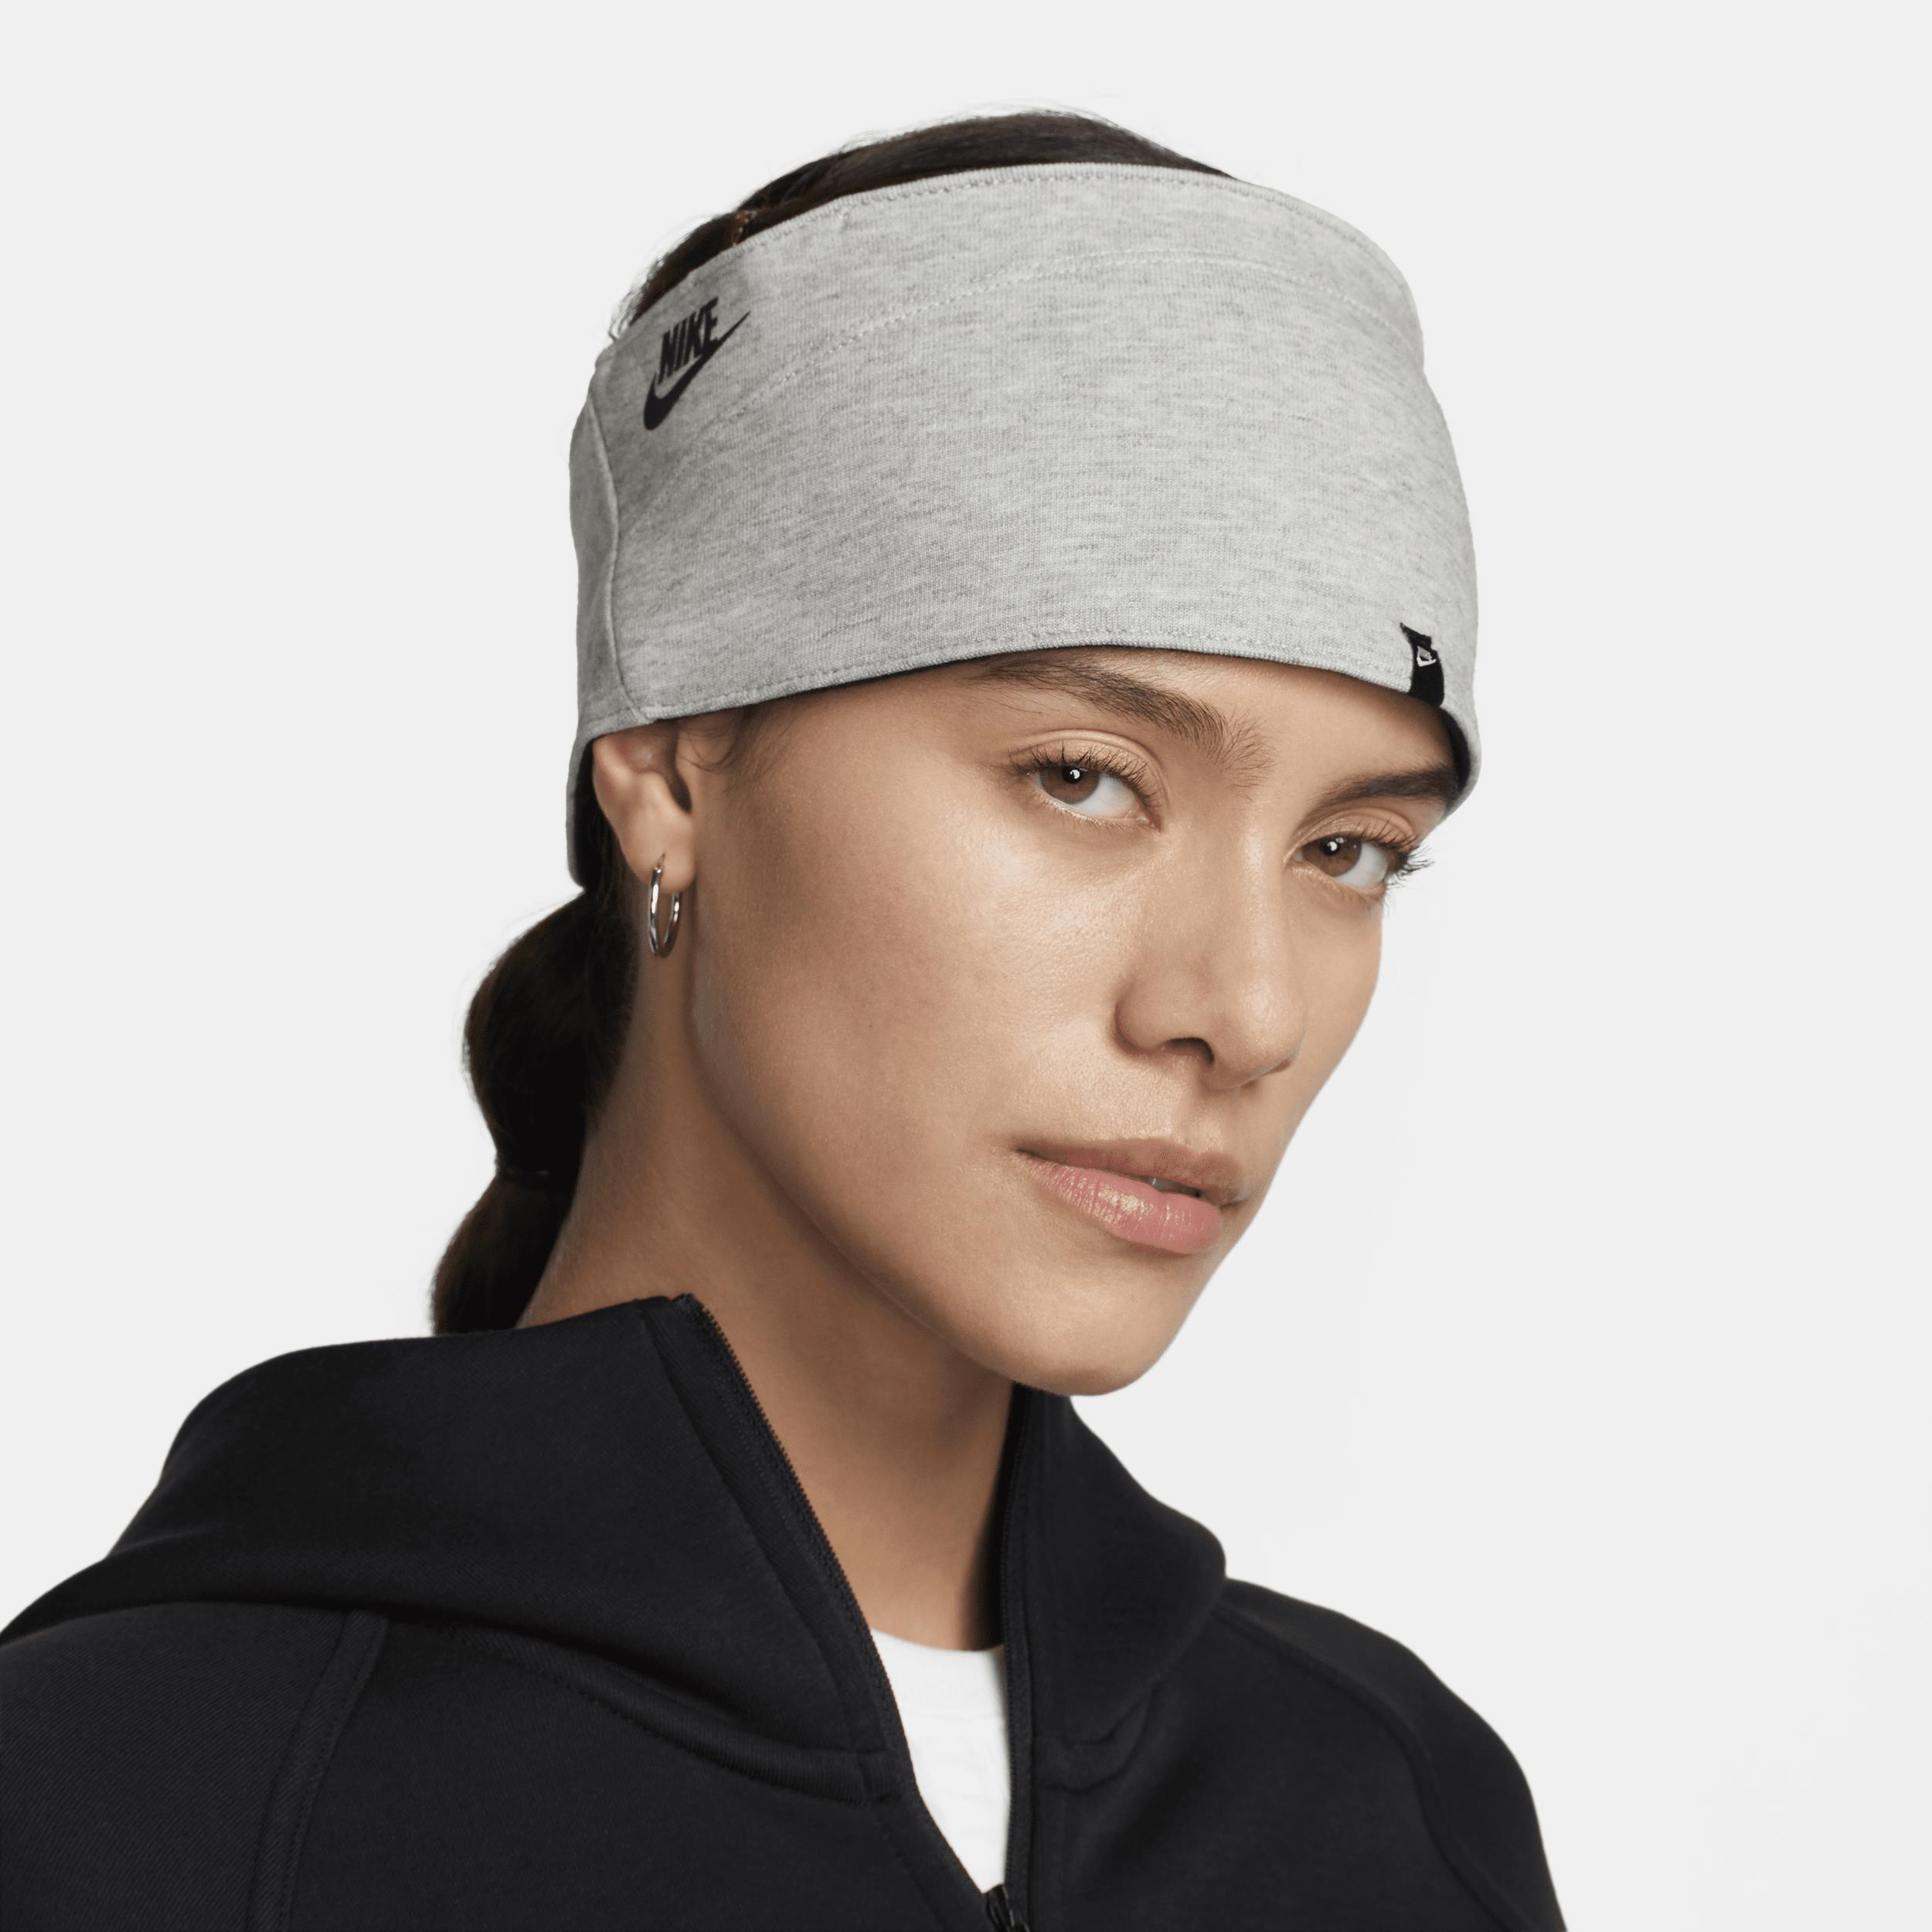 Nike - Tech Fleece Headband - Homme — Le coureur nordique